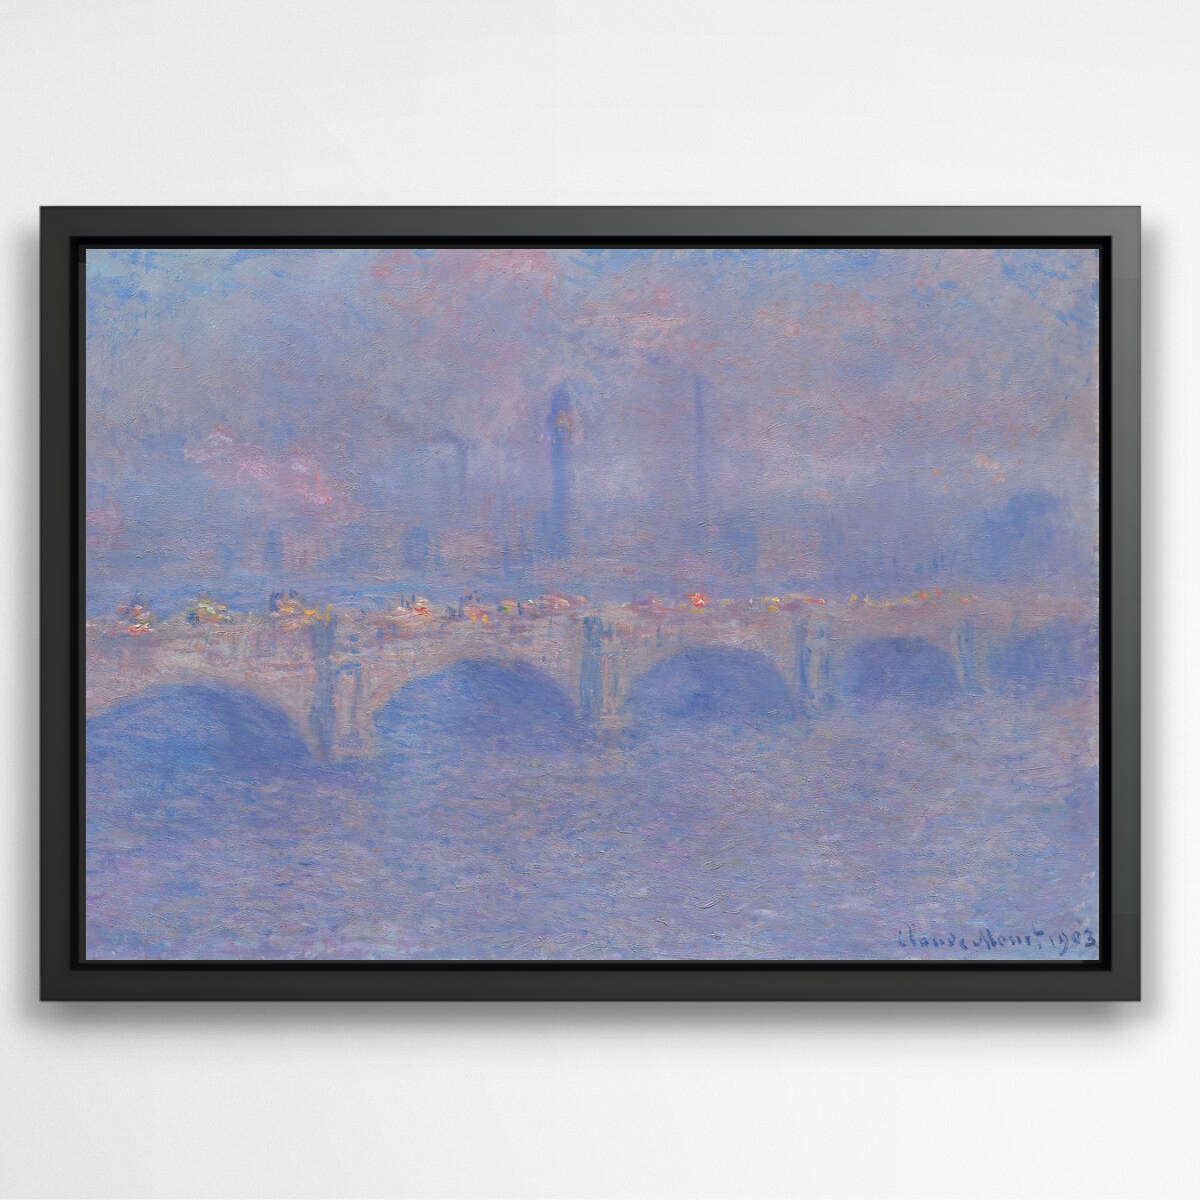 Waterloo Bridge Sunlight Effect | Claude Monet Wall Art Prints - The Canvas Hive